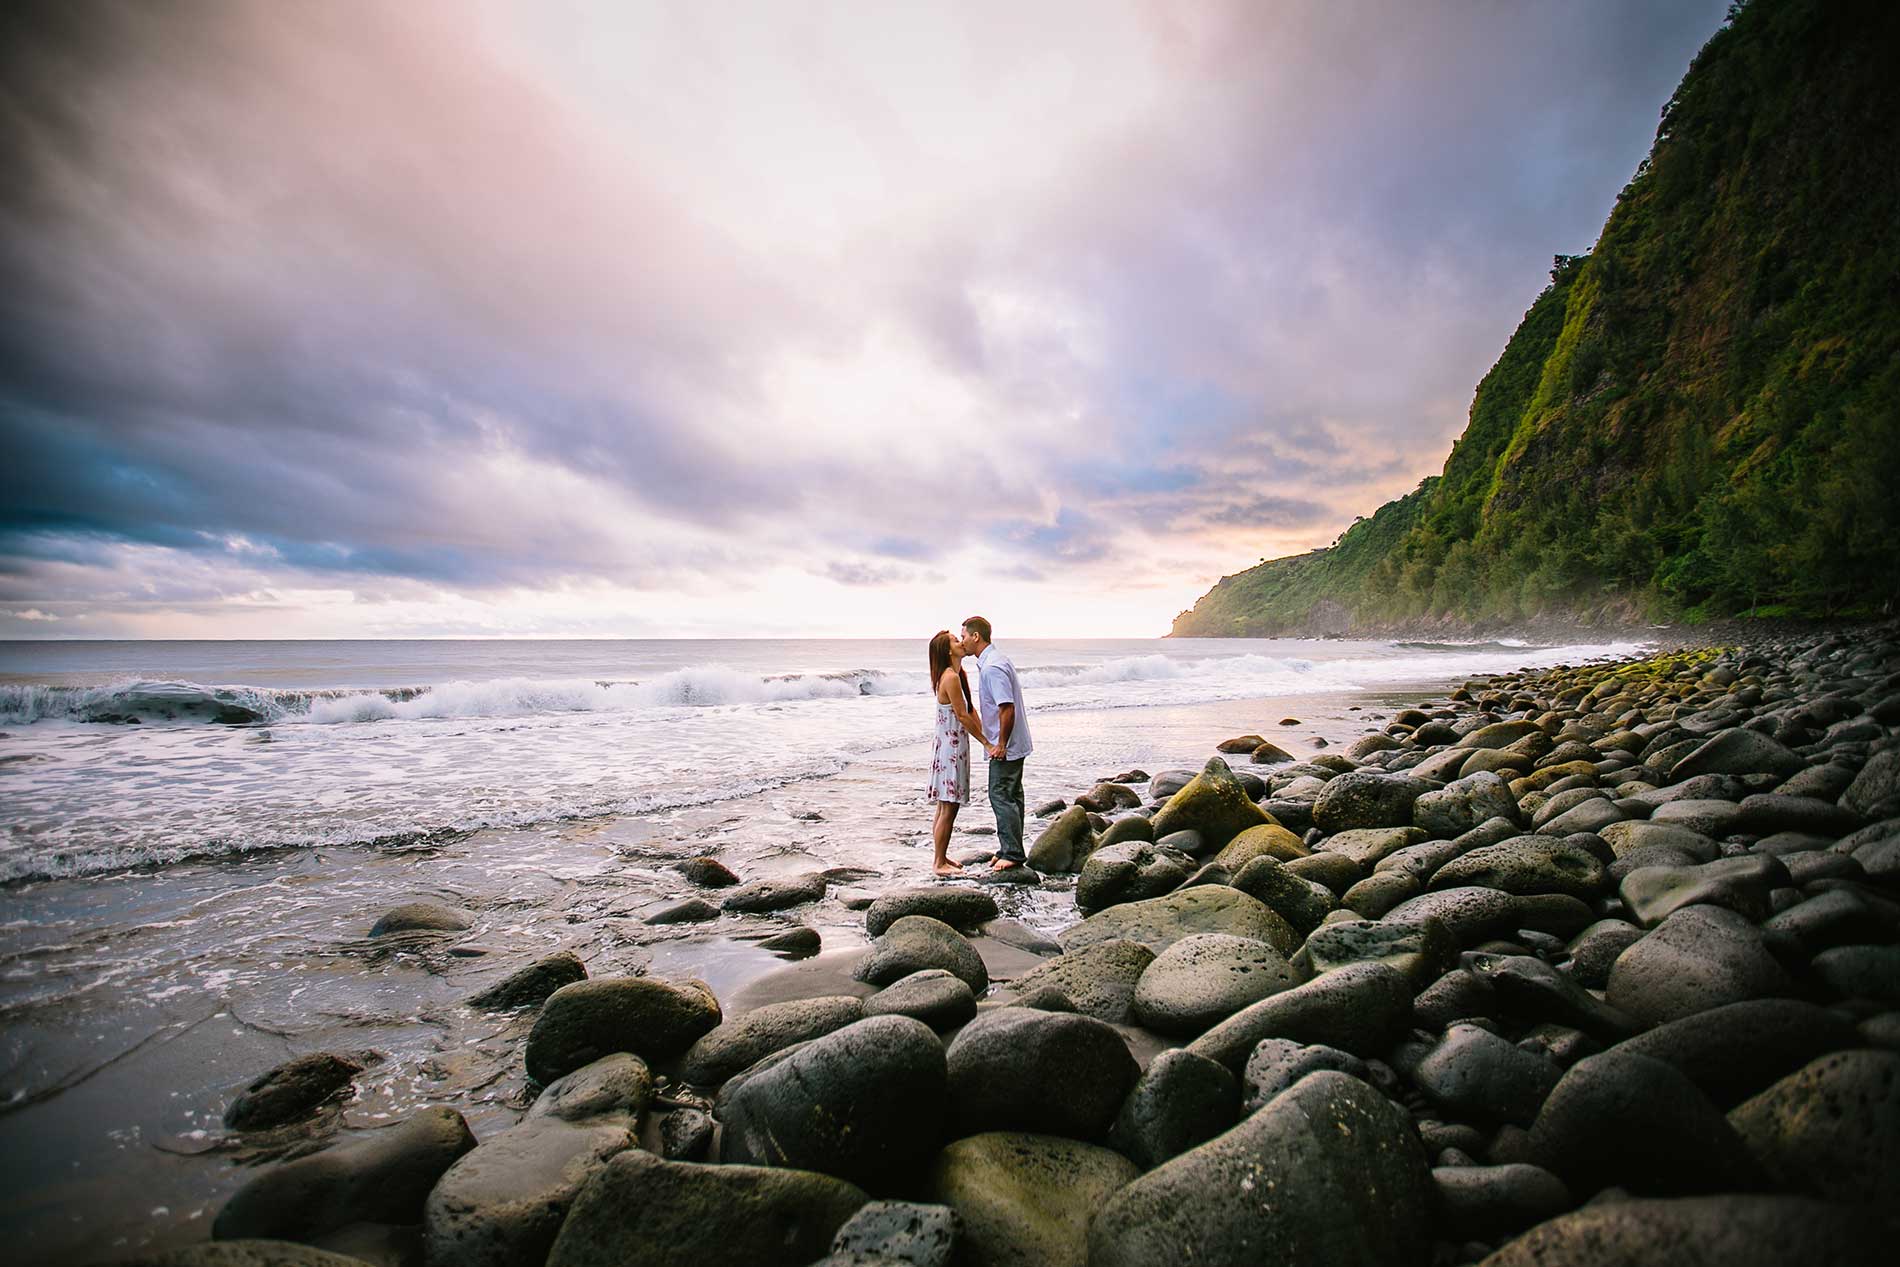 image of couple on rocks near a beach